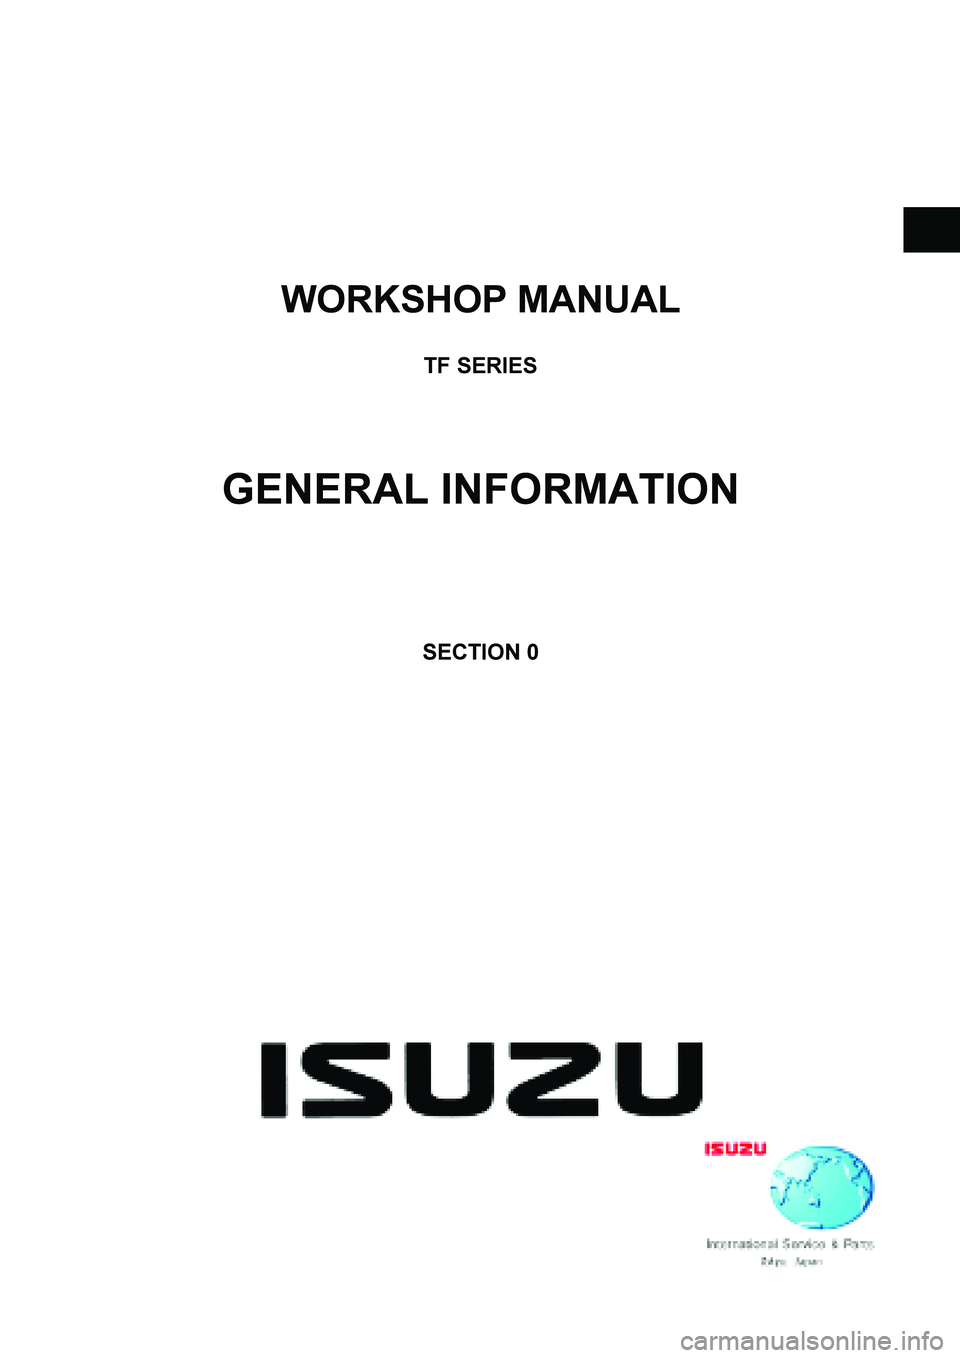 ISUZU TF SERIES 2004  Workshop Manual  
WORKSHOP MANUAL 
 
TF SERIES 
 
 
 
 
GENERAL INFORMATION 
 
 
 
 
 
 
SECTION 0 
 
 
  